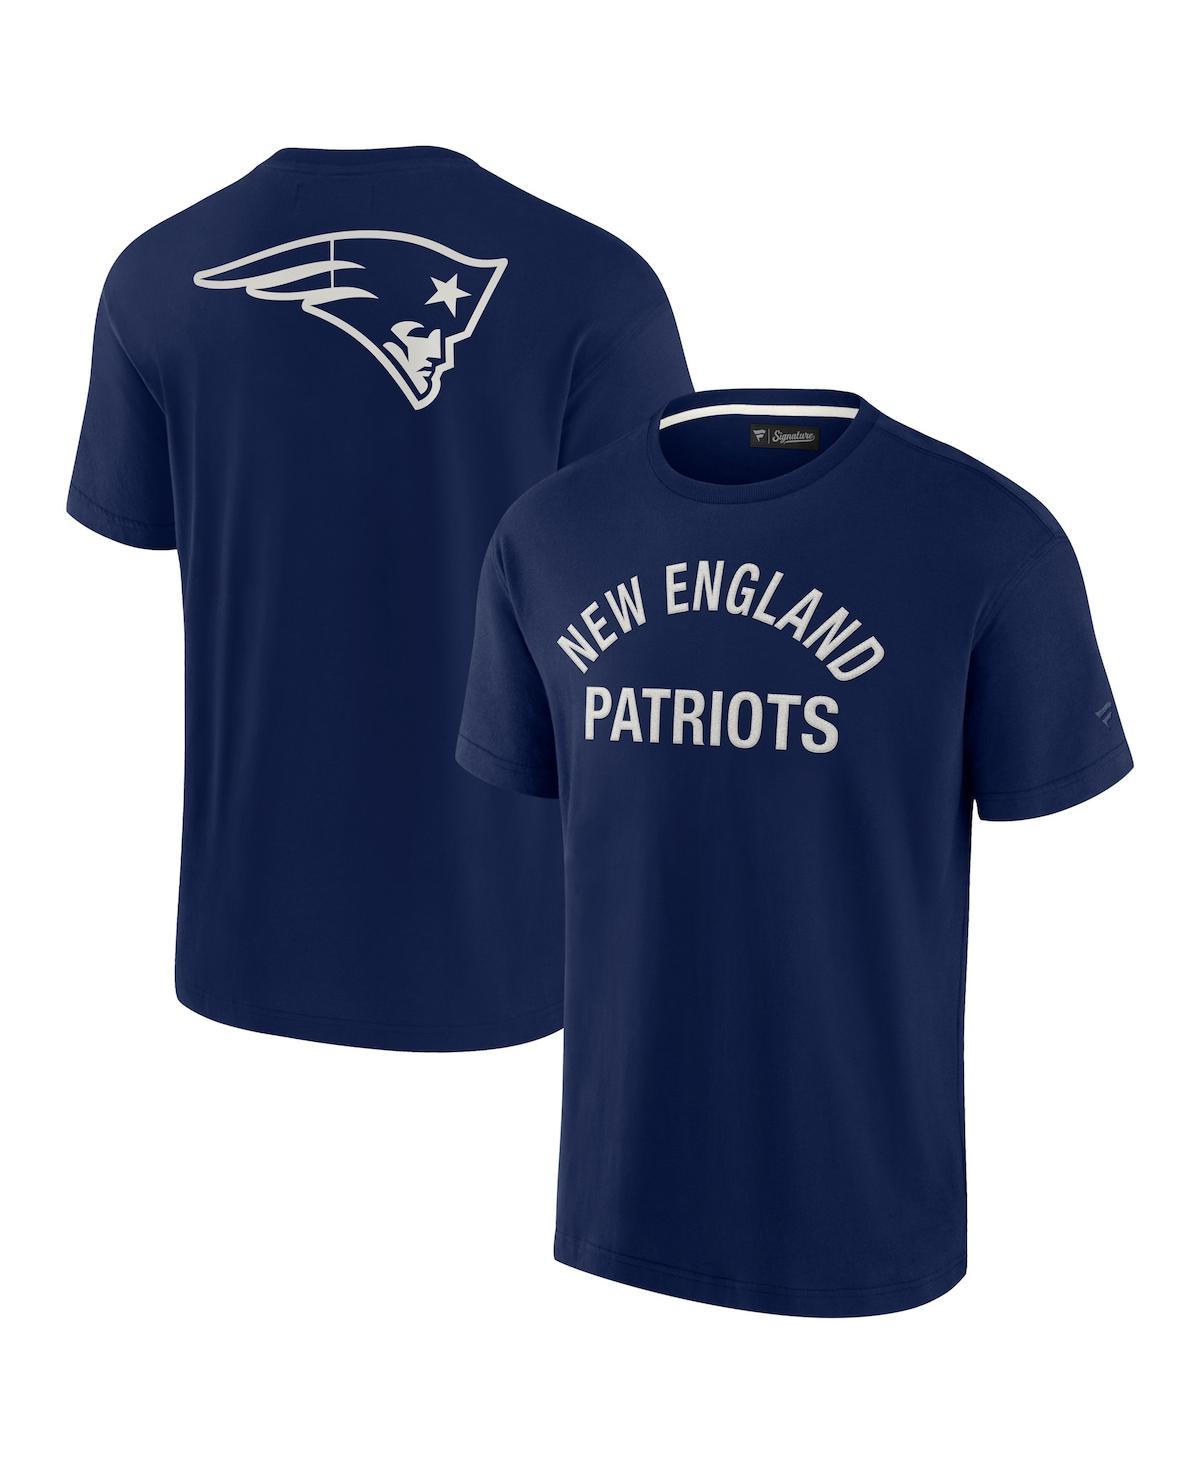 Fanatics Signature Men's And Women's  Navy New England Patriots Super Soft Short Sleeve T-shirt